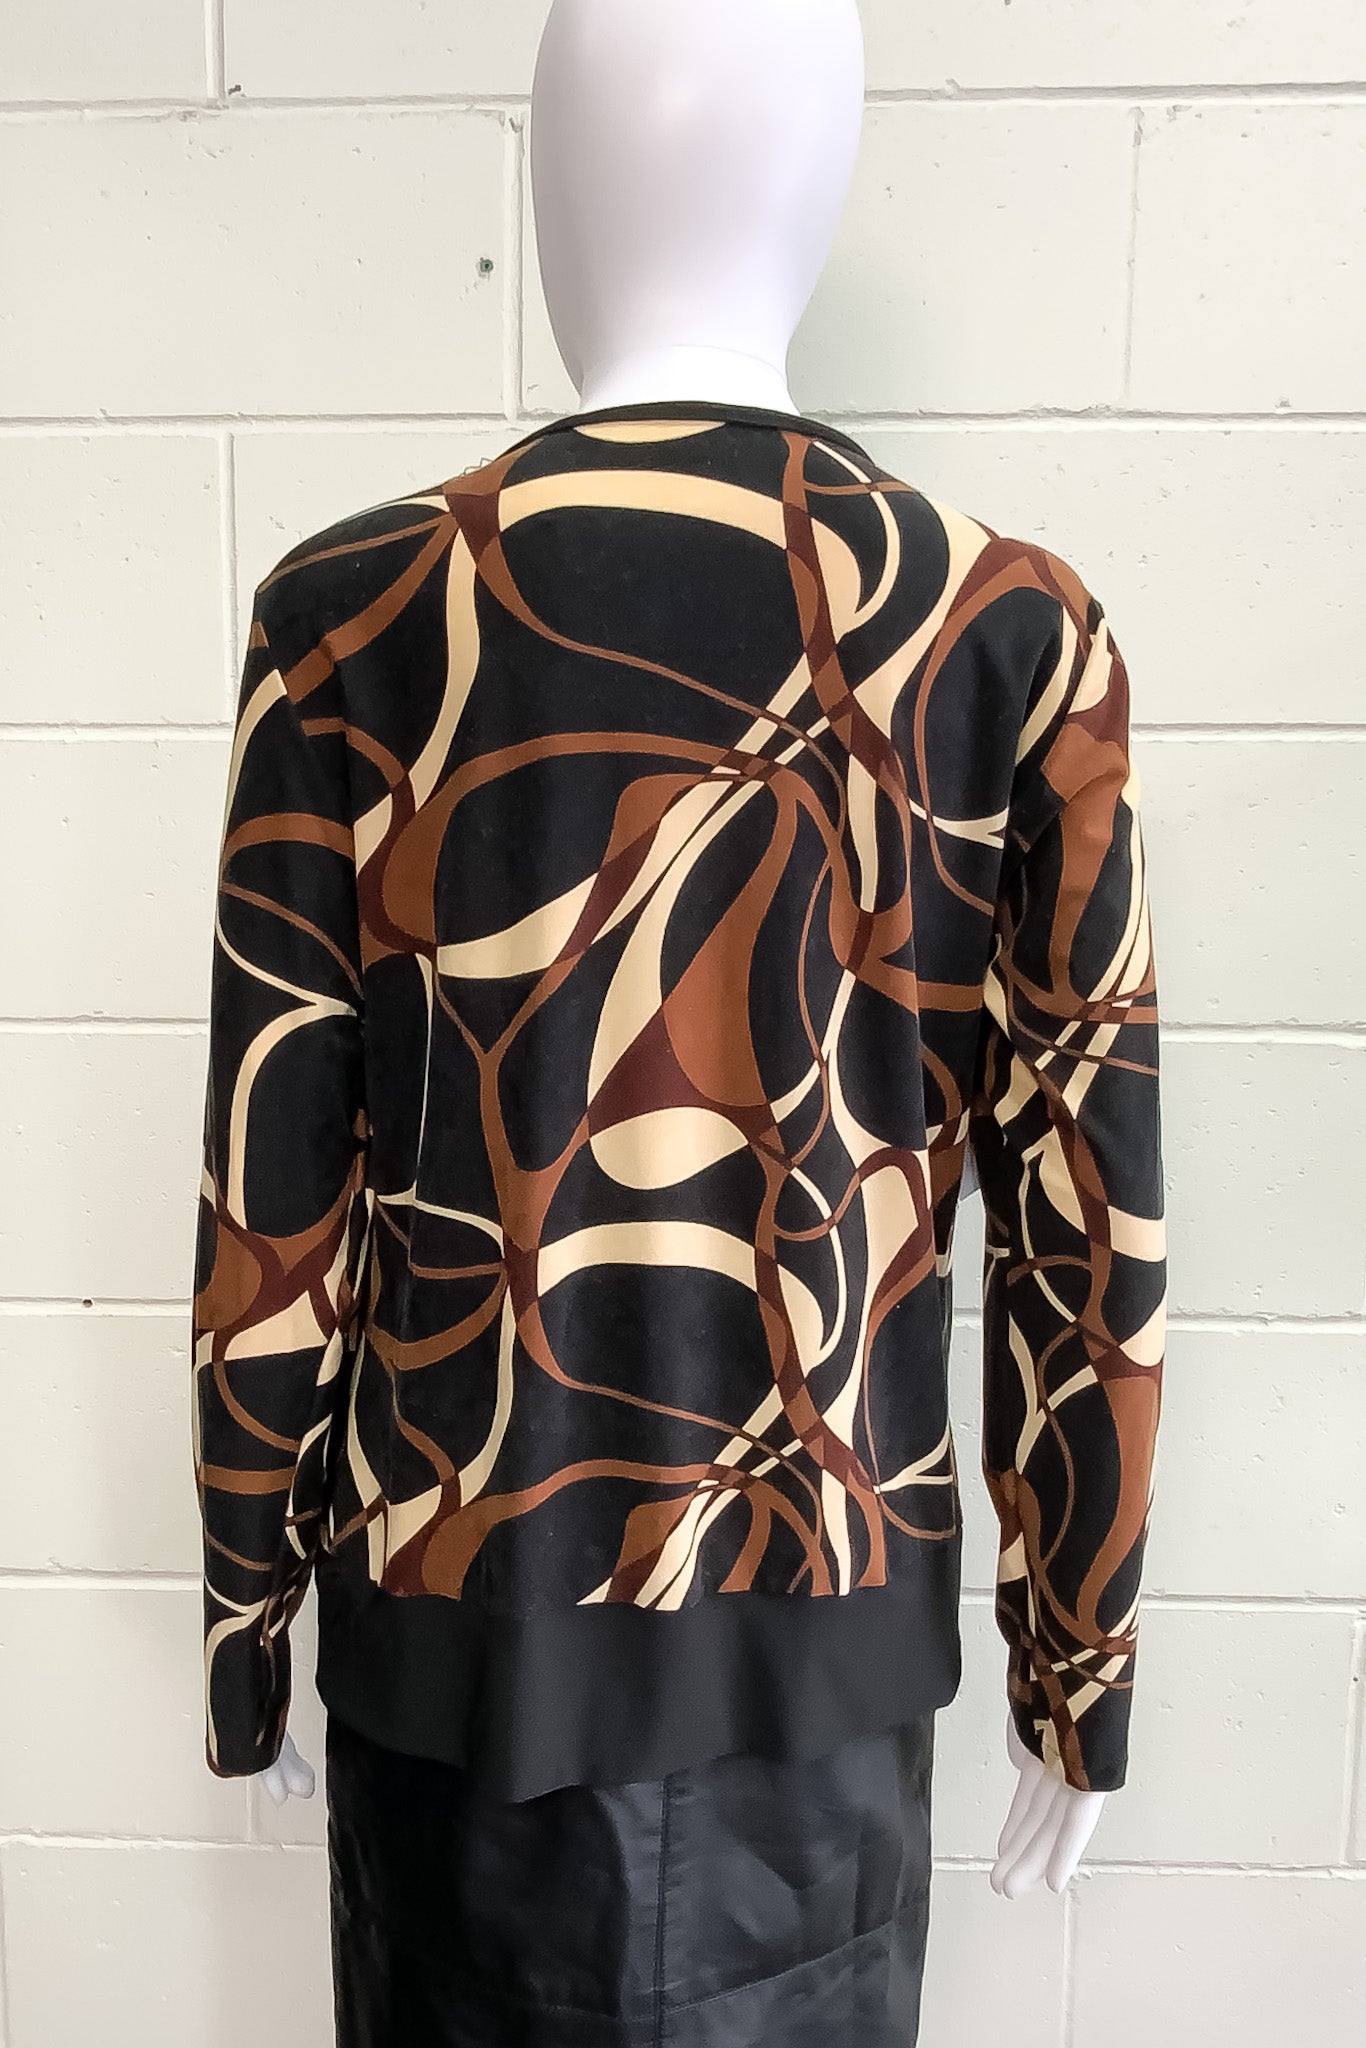 Vintage Retro Designer Black Brown Abstract Long Sleeve Top - Size M